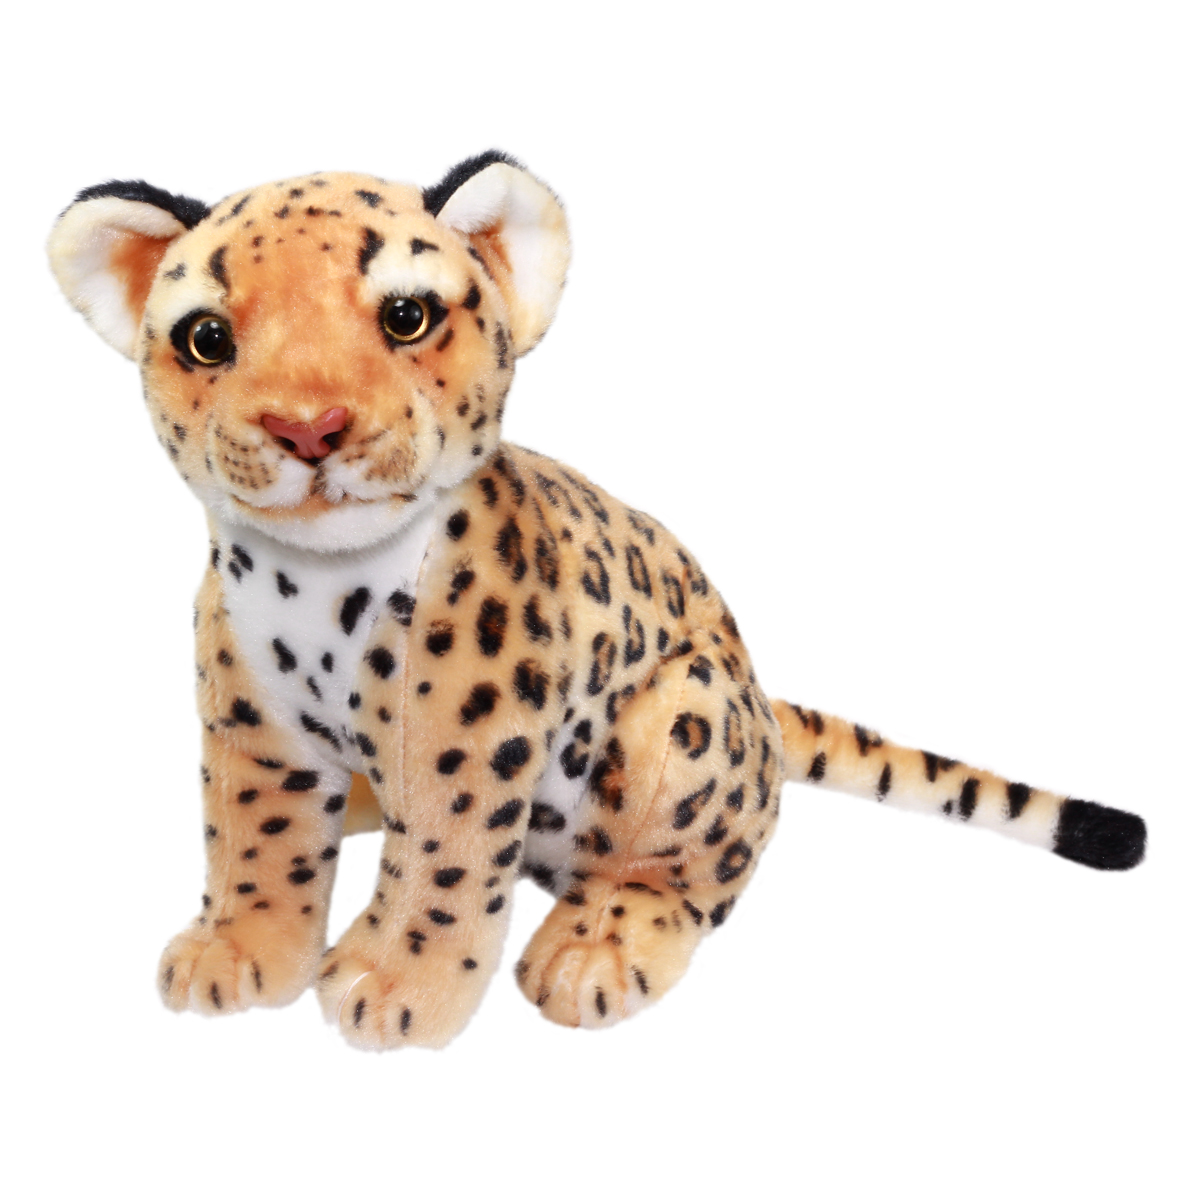 leopard stuffed animal